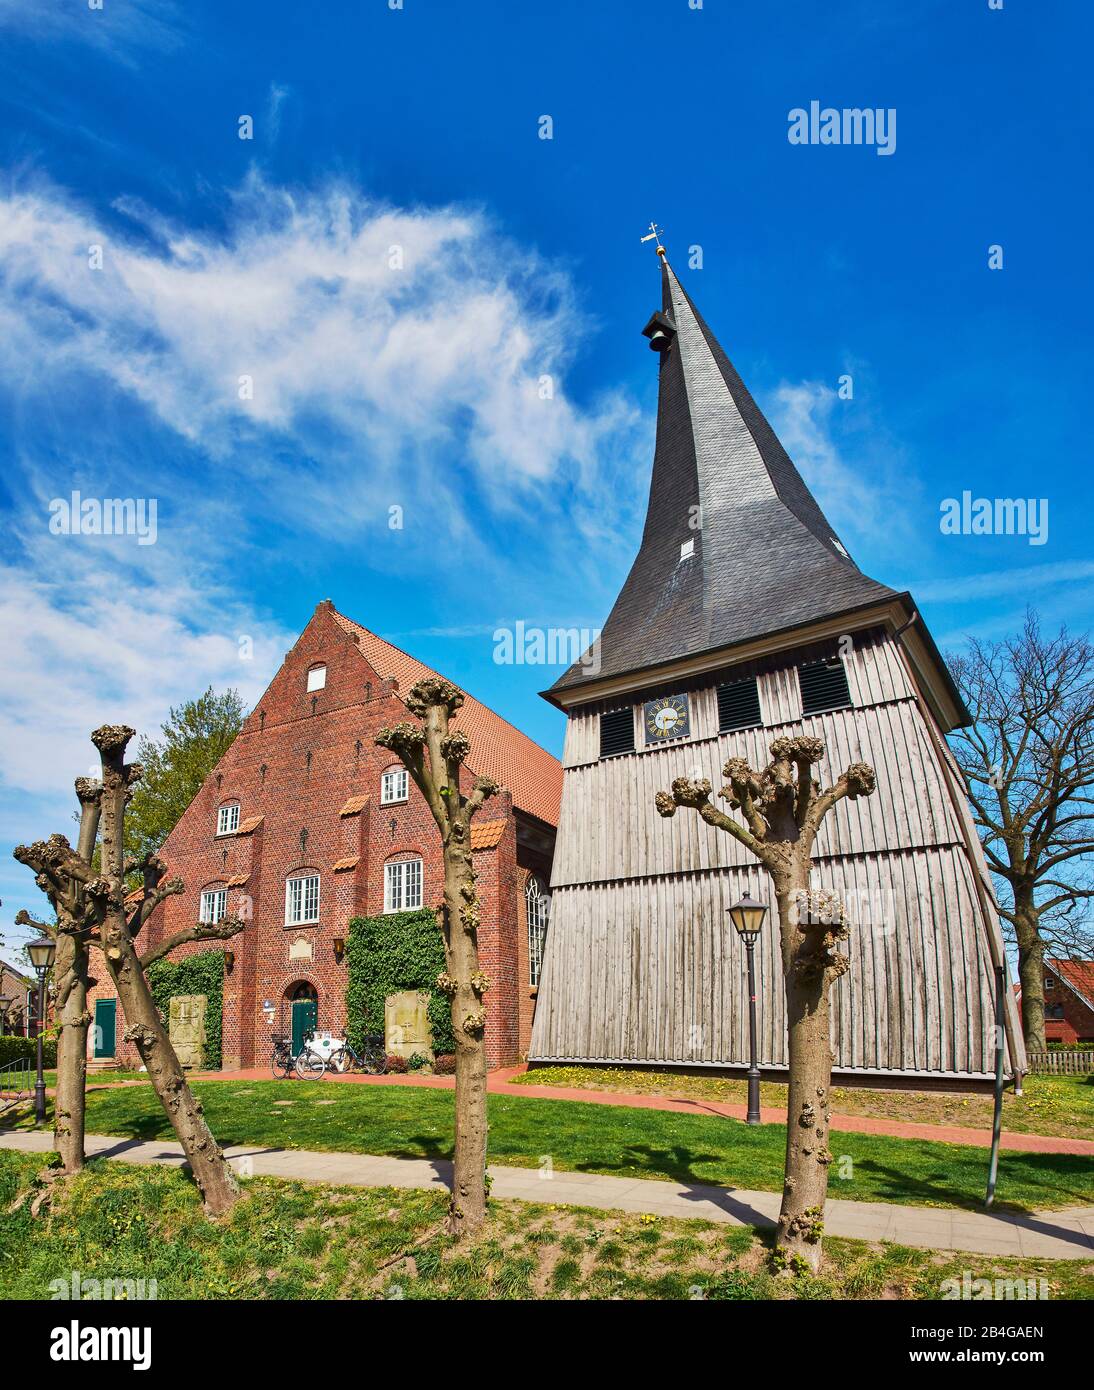 Germany, Lower Saxony, Altes Land, Jork, Evangelical Lutheran Church St. Matthias, Fisheye effect Stock Photo